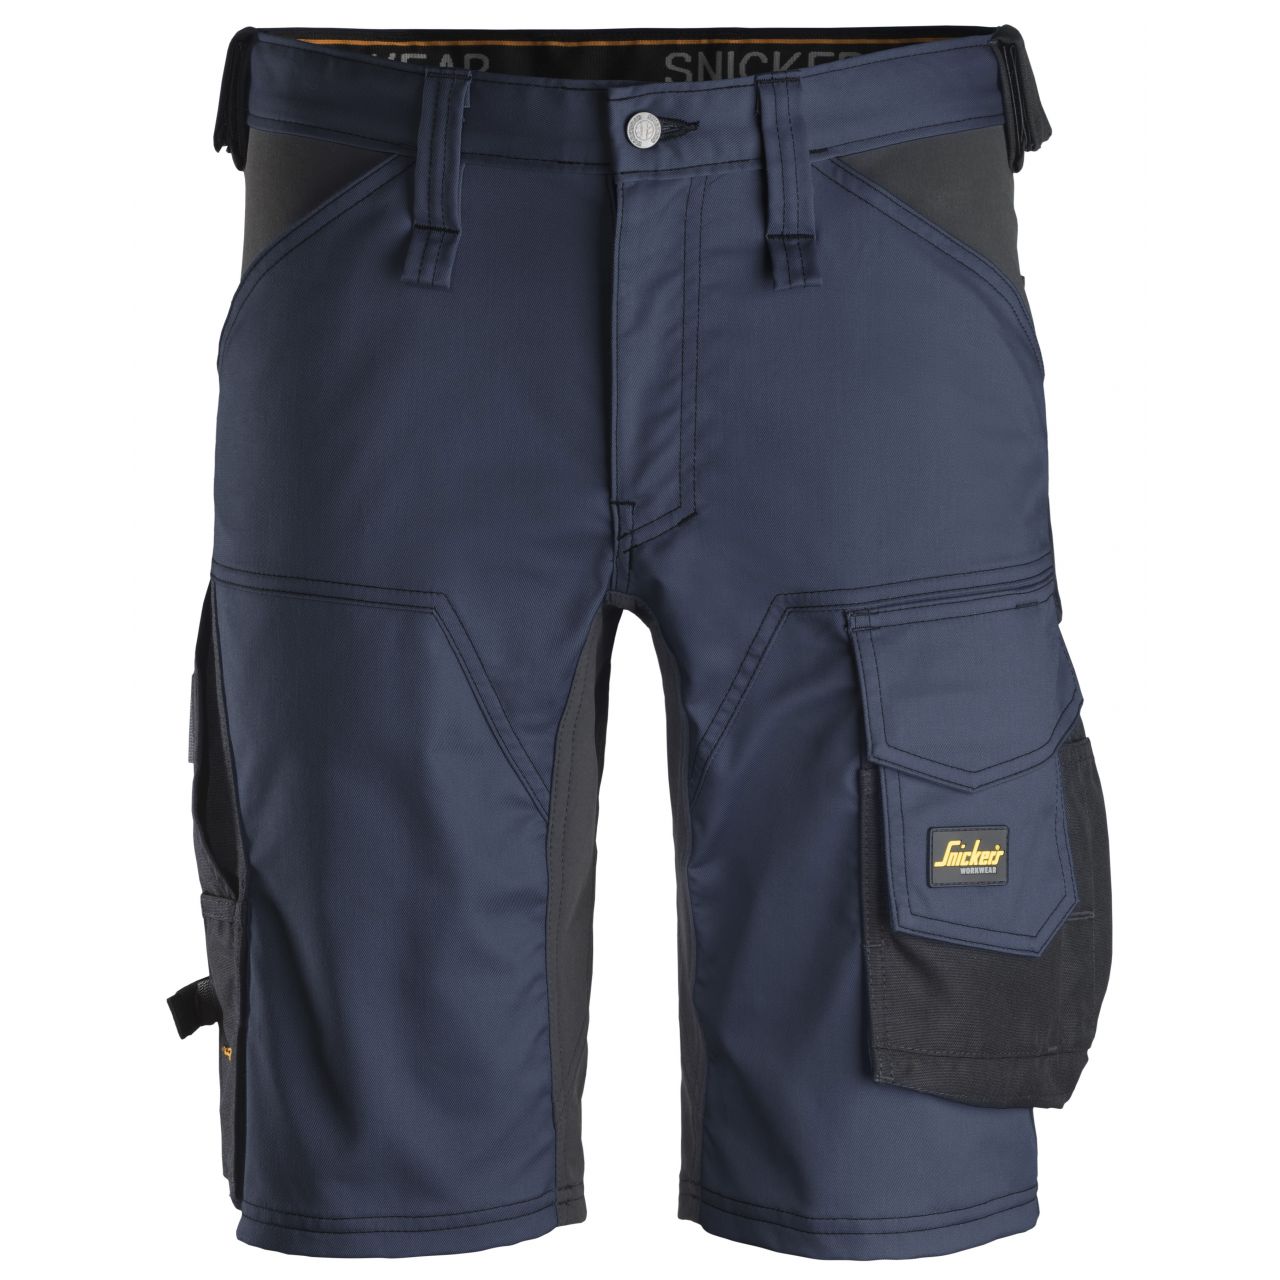 Pantalones cortos elásticos AllroundWork Azul Marino-Negro talla 54